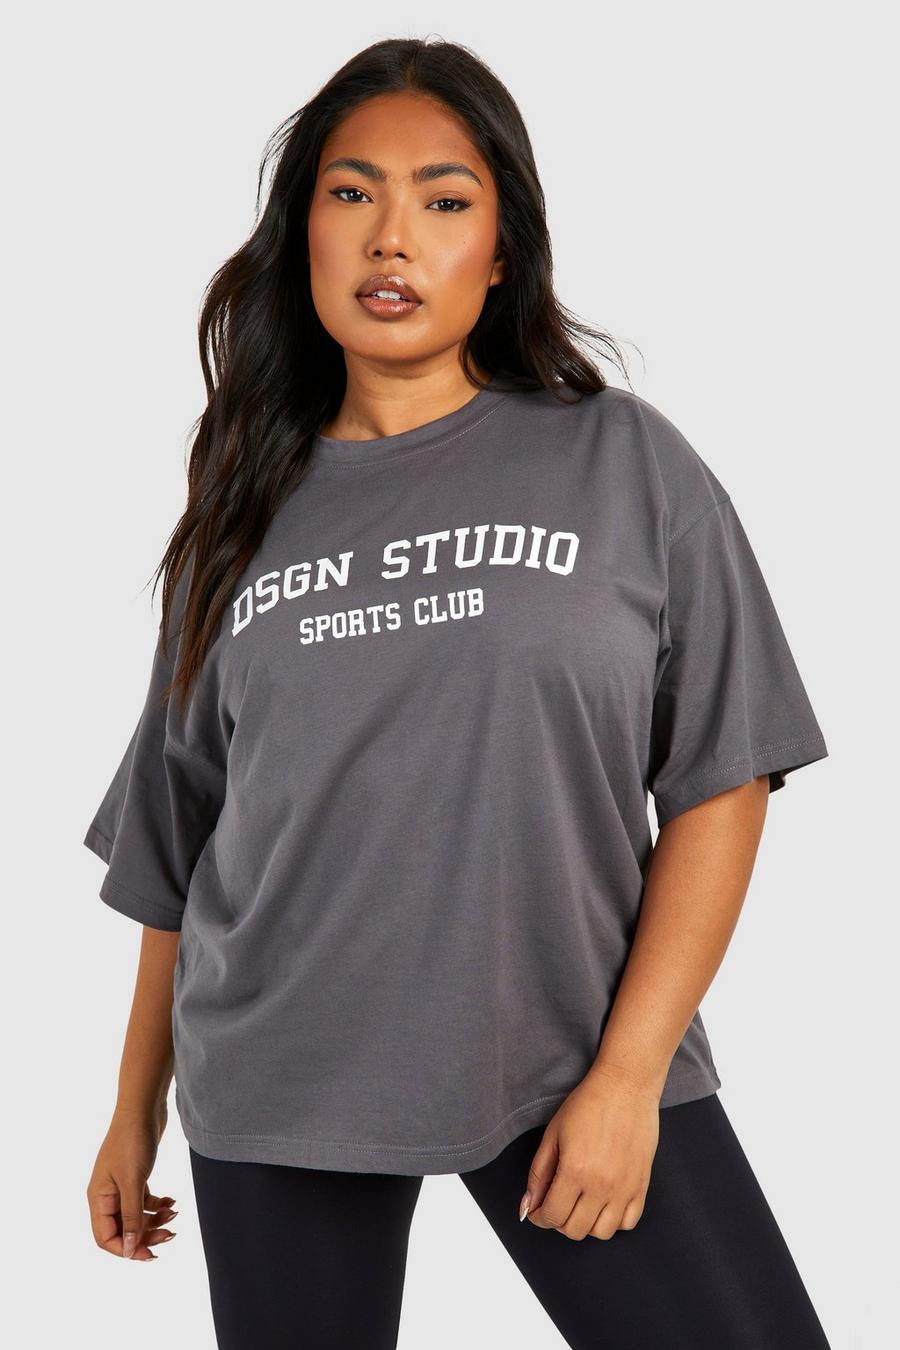 Charcoal Plus Dsgn Studio Sports Club Oversize t-shirt